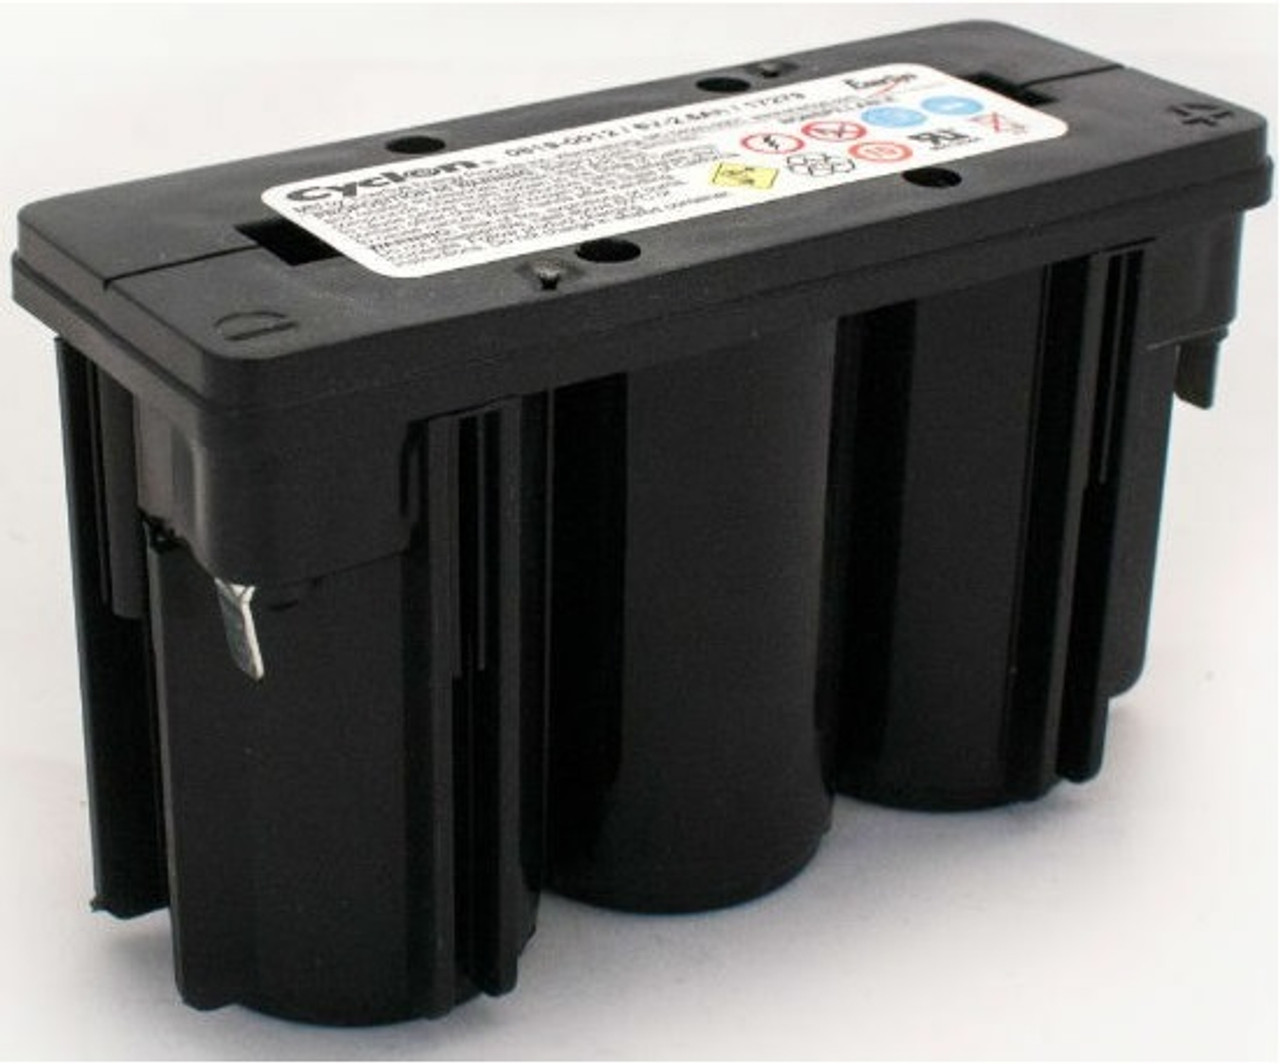 H C 6V - 8AH A2 (2x 9859-0012) Batteries Plomb Performance Cyclon Enersys ( 12V - 8Ah)